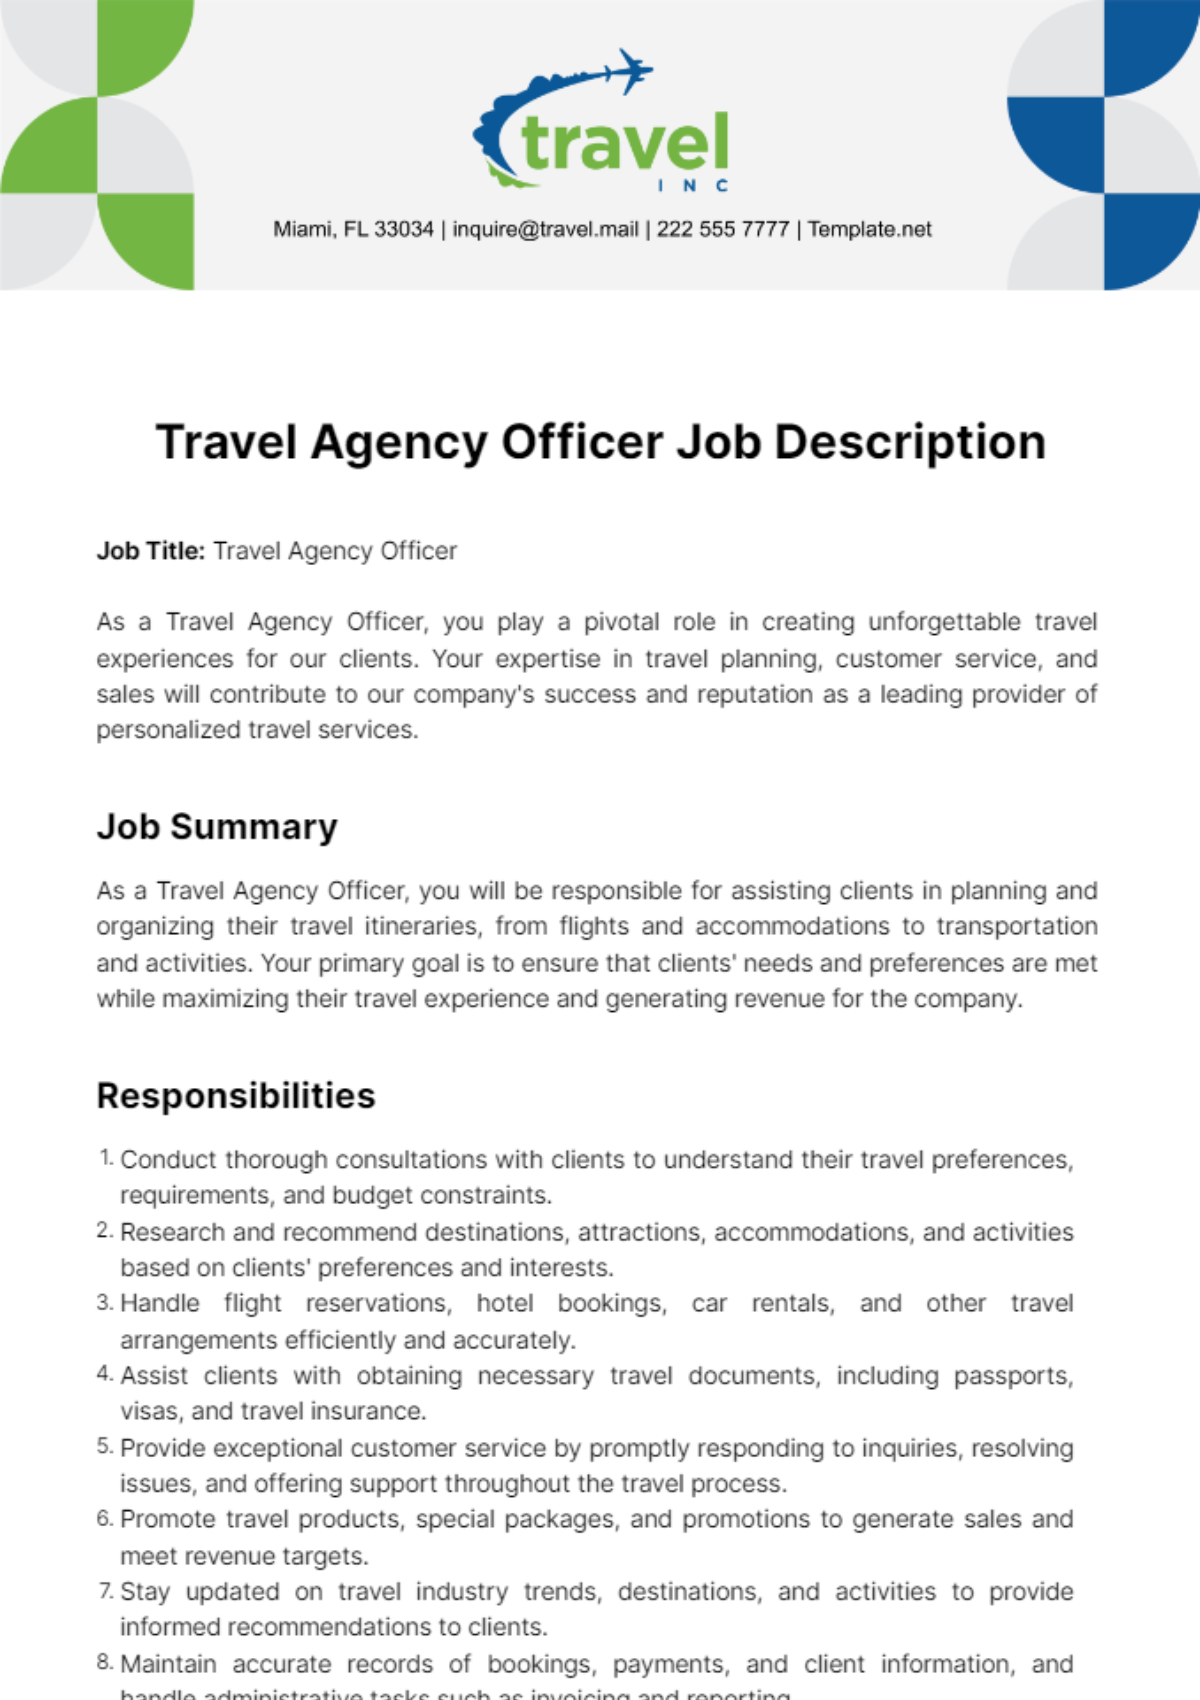 Travel Agency Officer Job Description Template